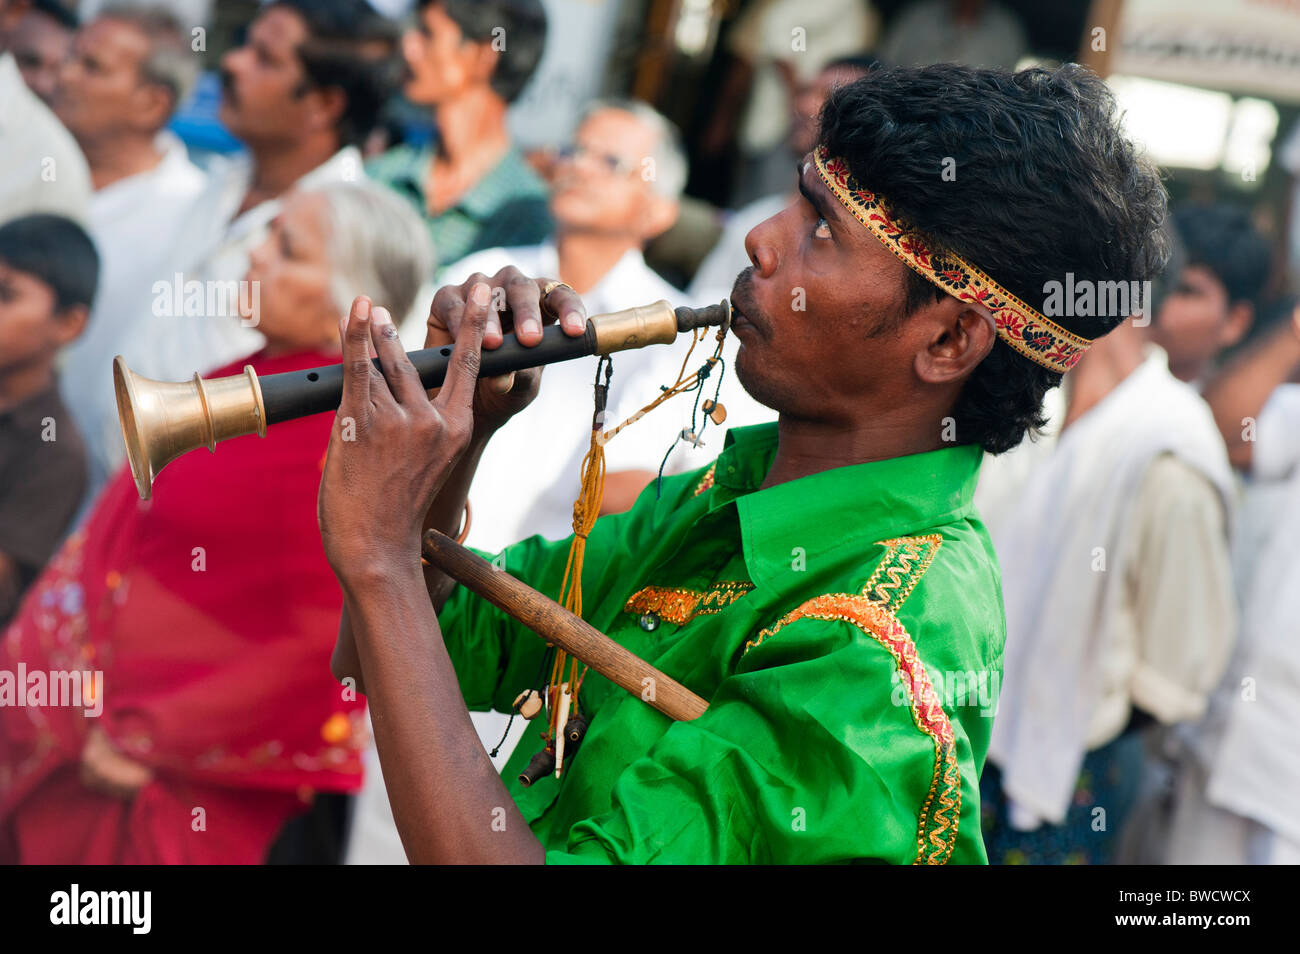 Indian festival nadaswaram player street performer at Sathya Sai Baba 85th birthday celebrations in Puttaparthi, Andhra Pradesh, India Stock Photo